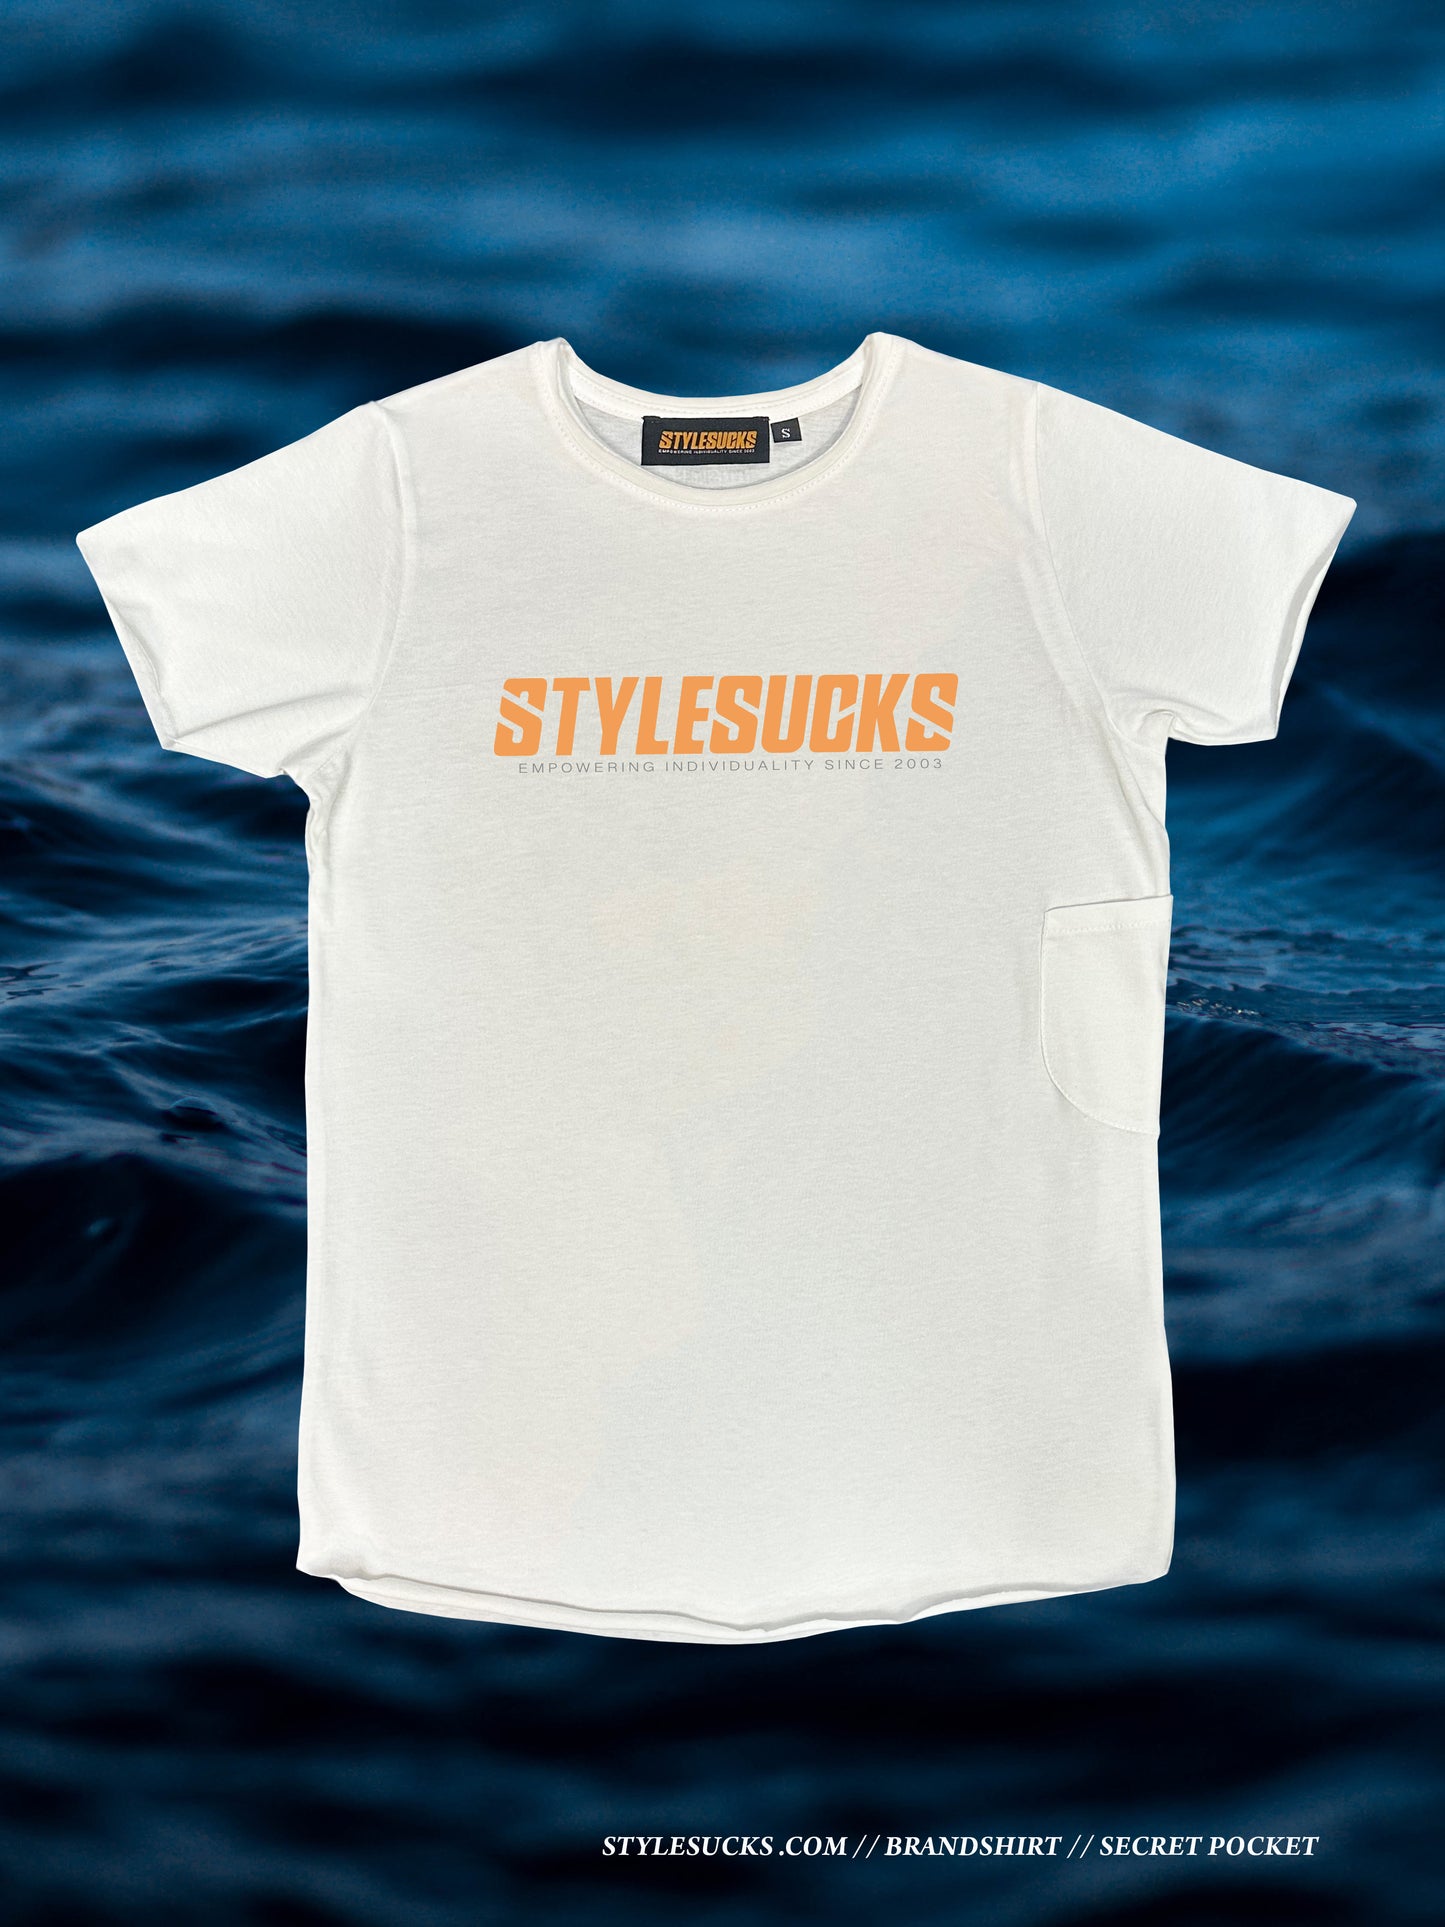 Signature Shirt: Logoshirt stylesucks.com